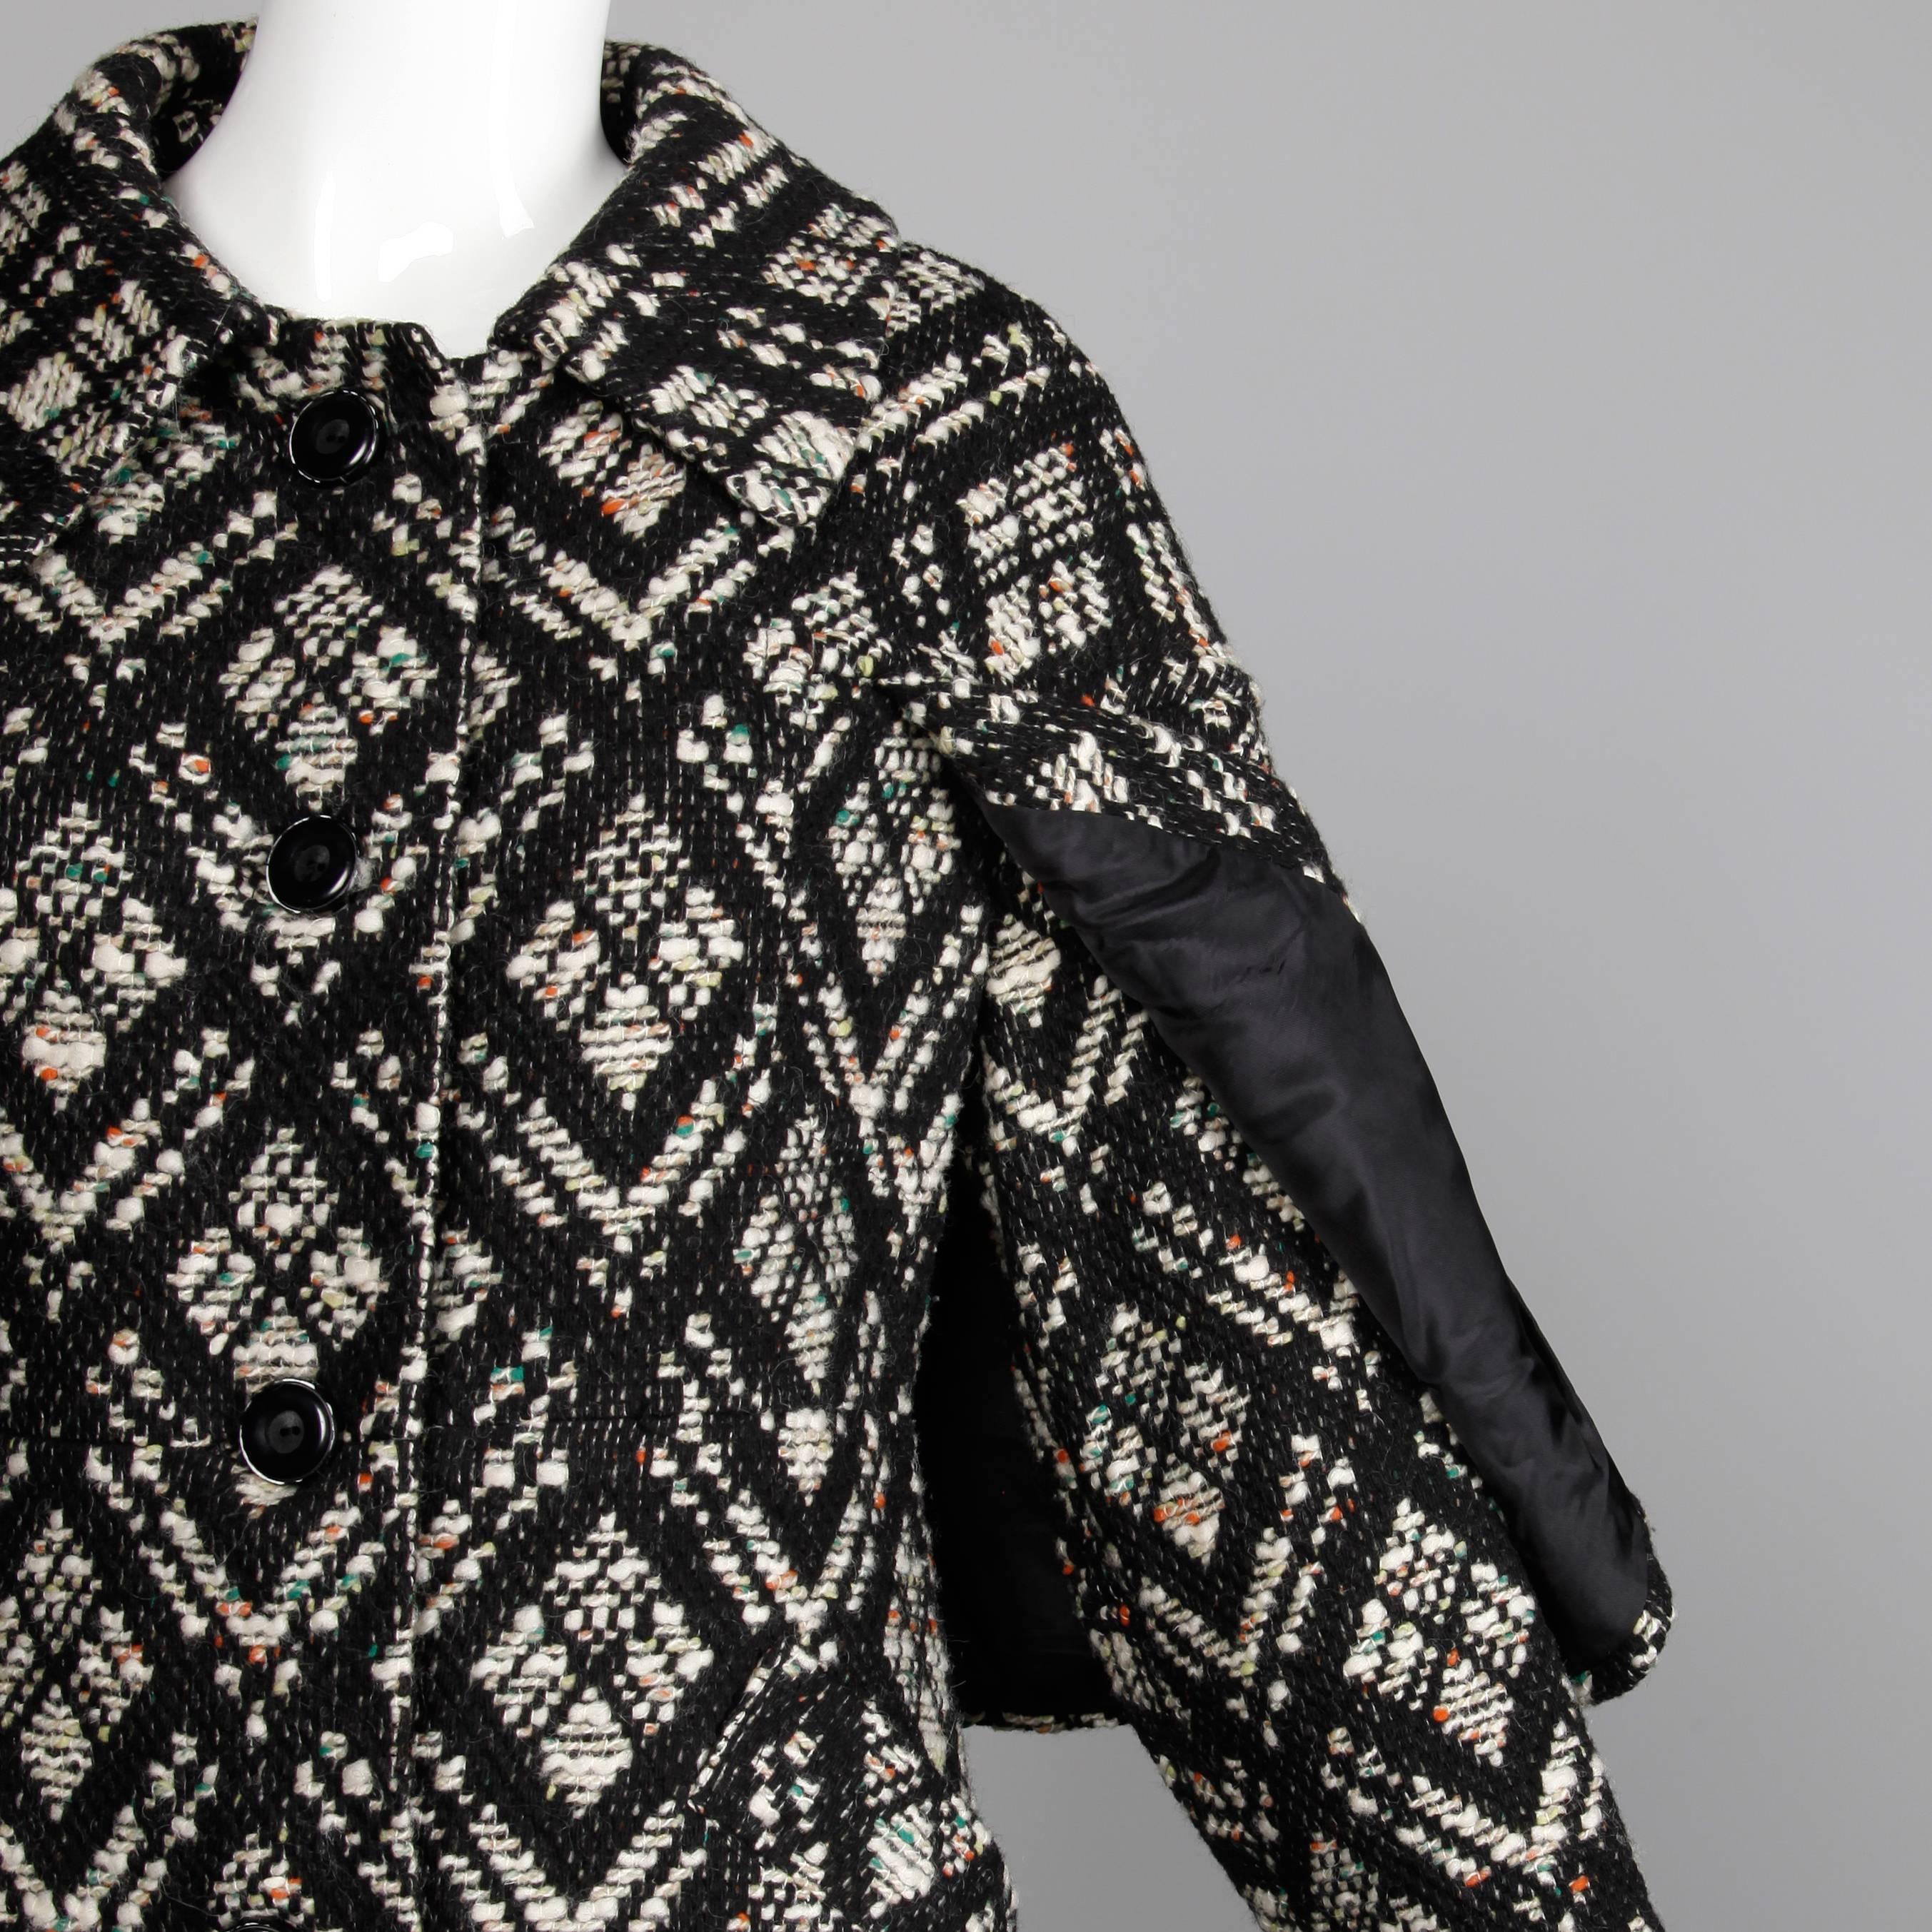 1970s Vintage Black + White Irish Wool Tweed Cape Coat with Fringe Trim For Sale 2